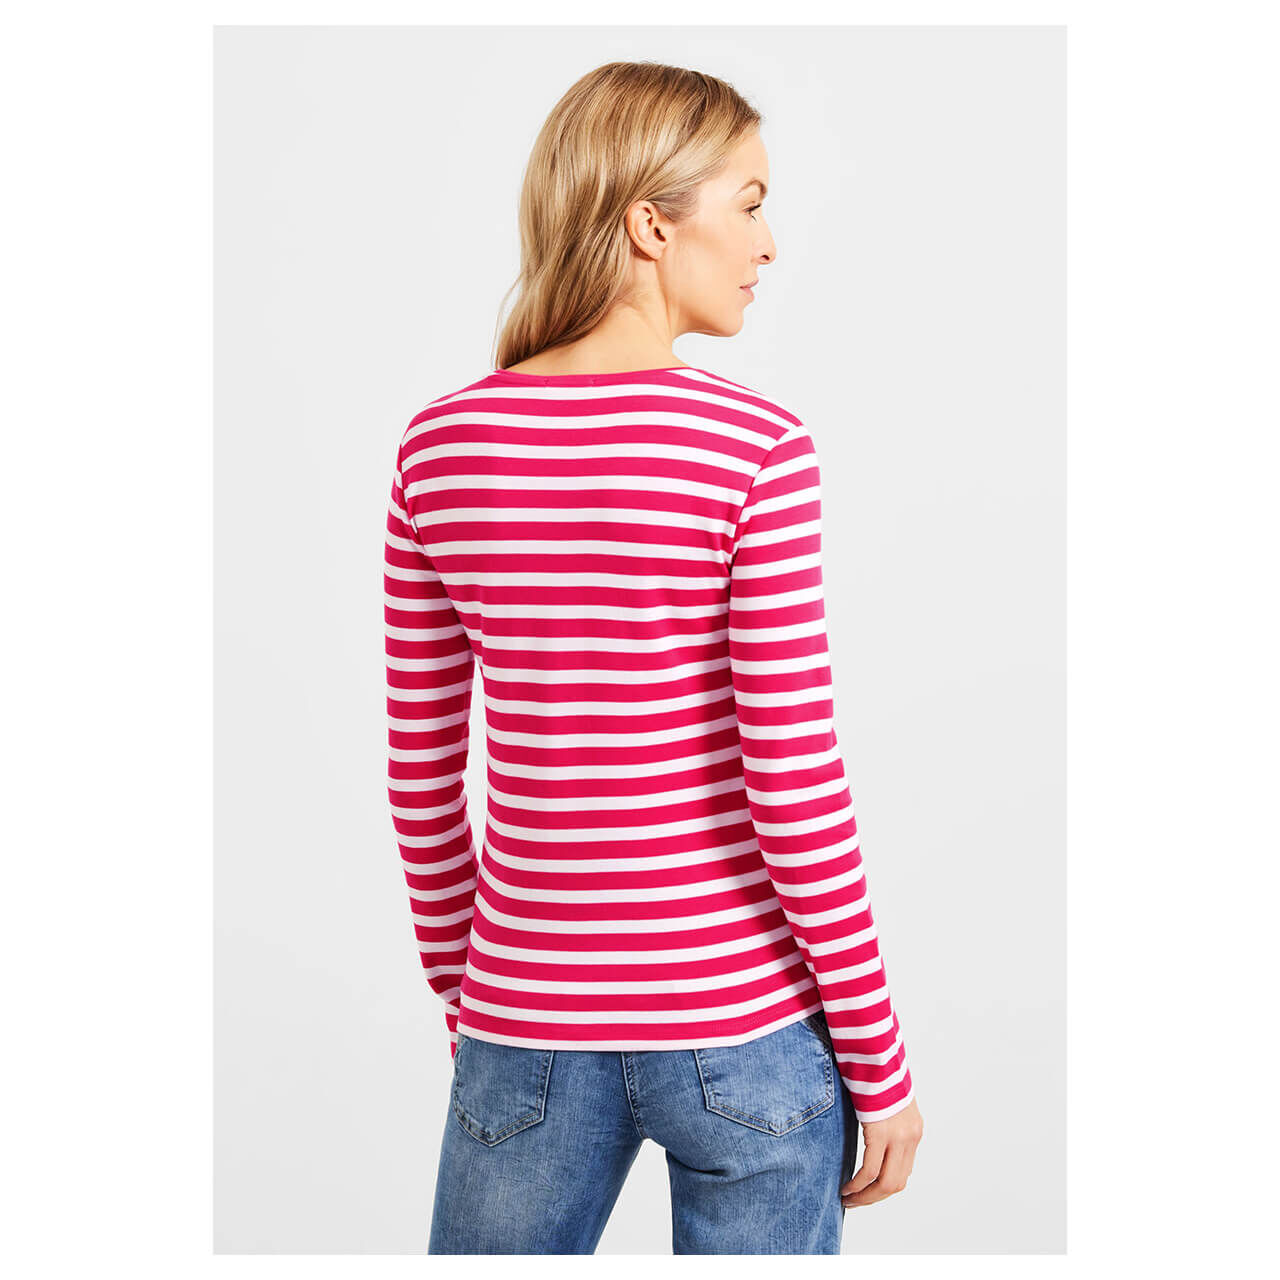 Cecil Pia Langarm Shirt fresh pink stripes